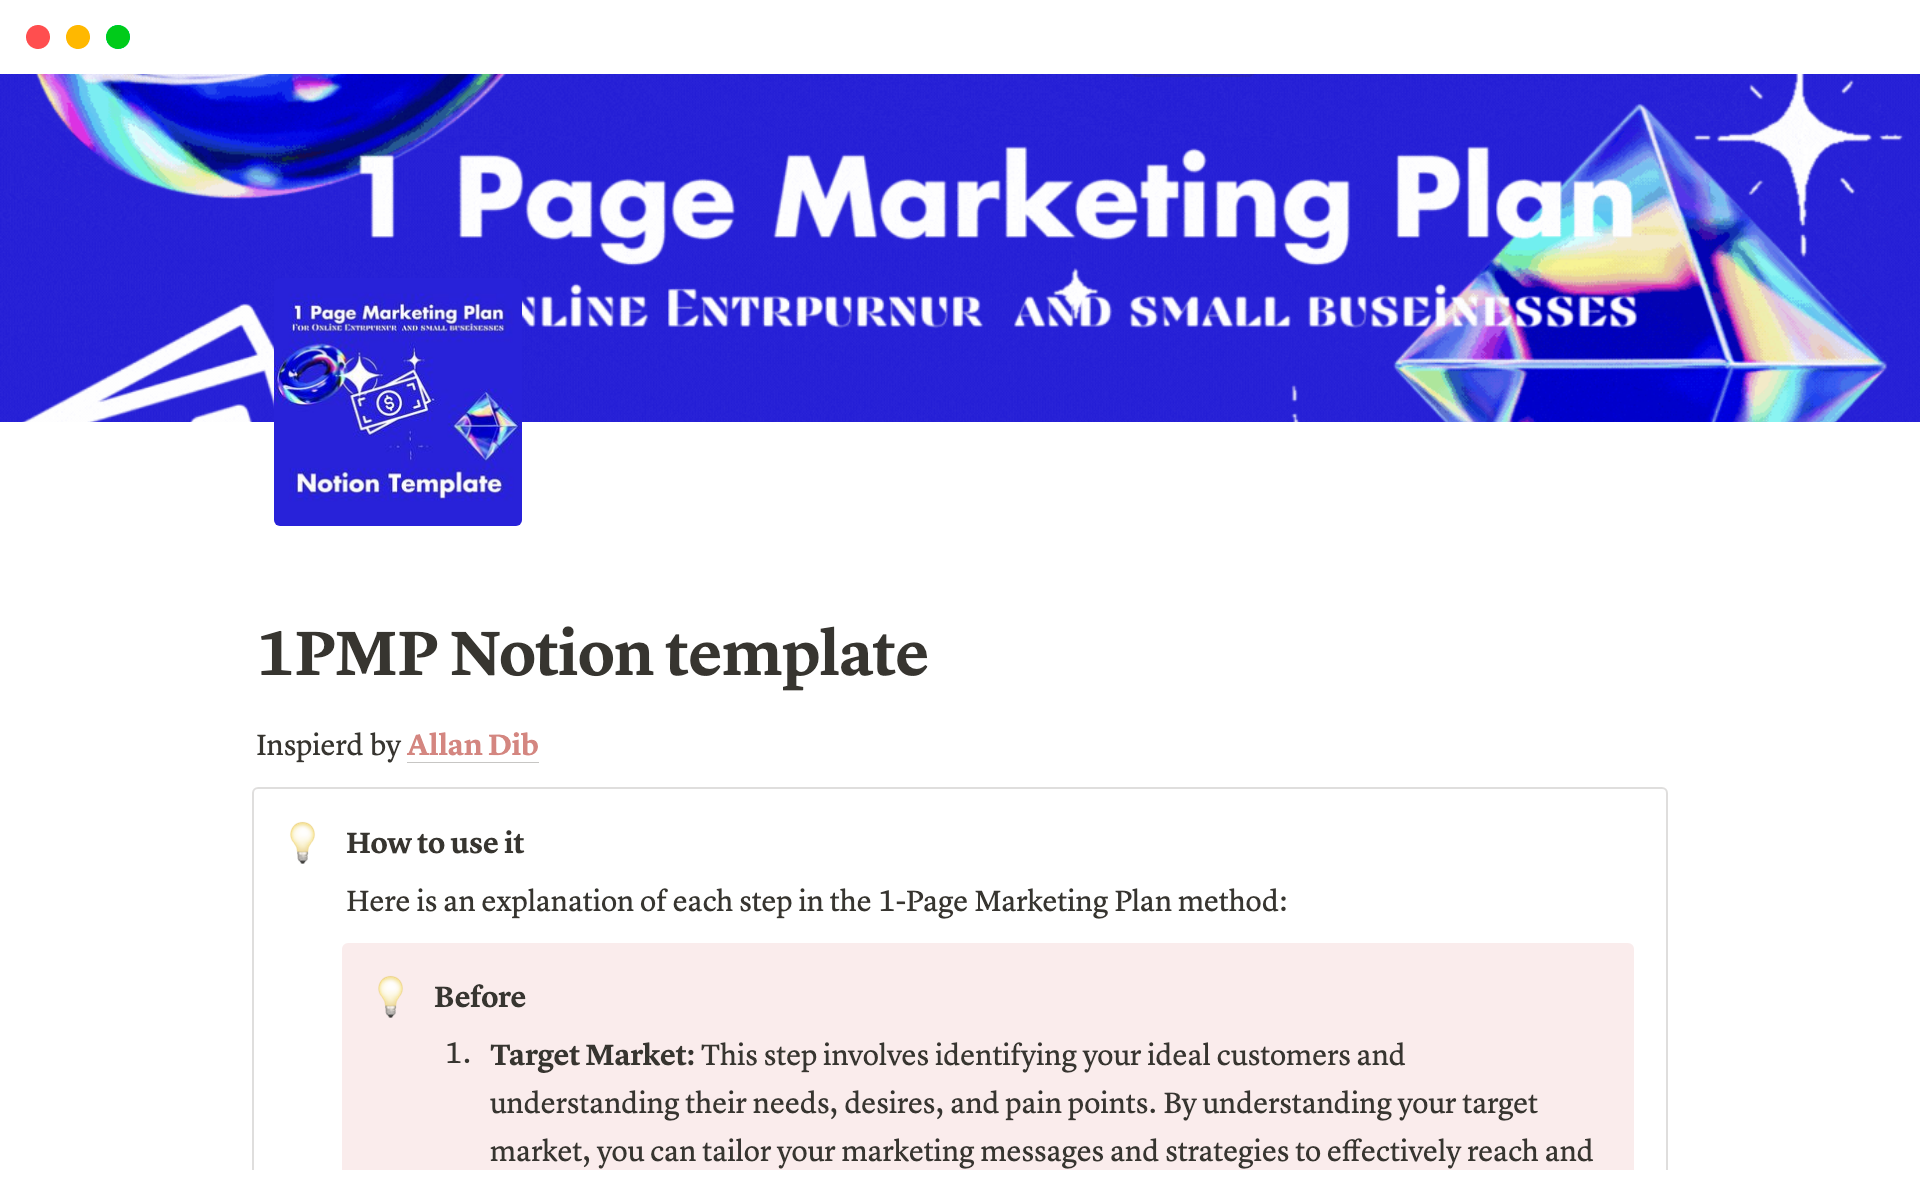 En forhåndsvisning av mal for MarketBoost: The Ultimate 1-Page Marketing Plan Notion Template for Small Online Businesses